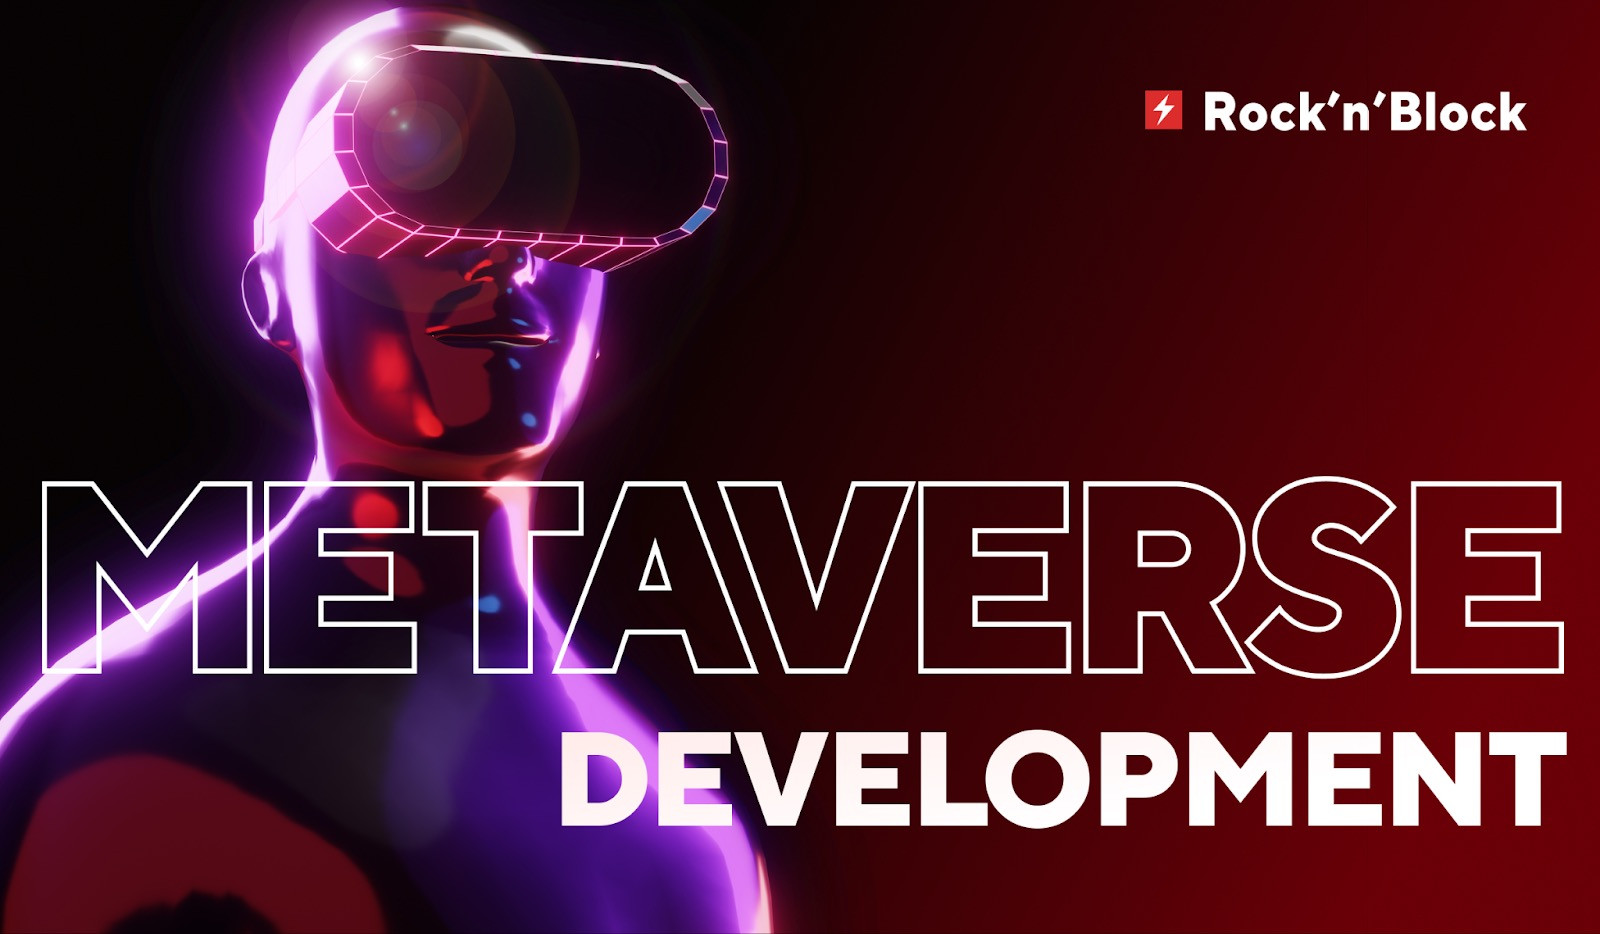 Metaverse development services